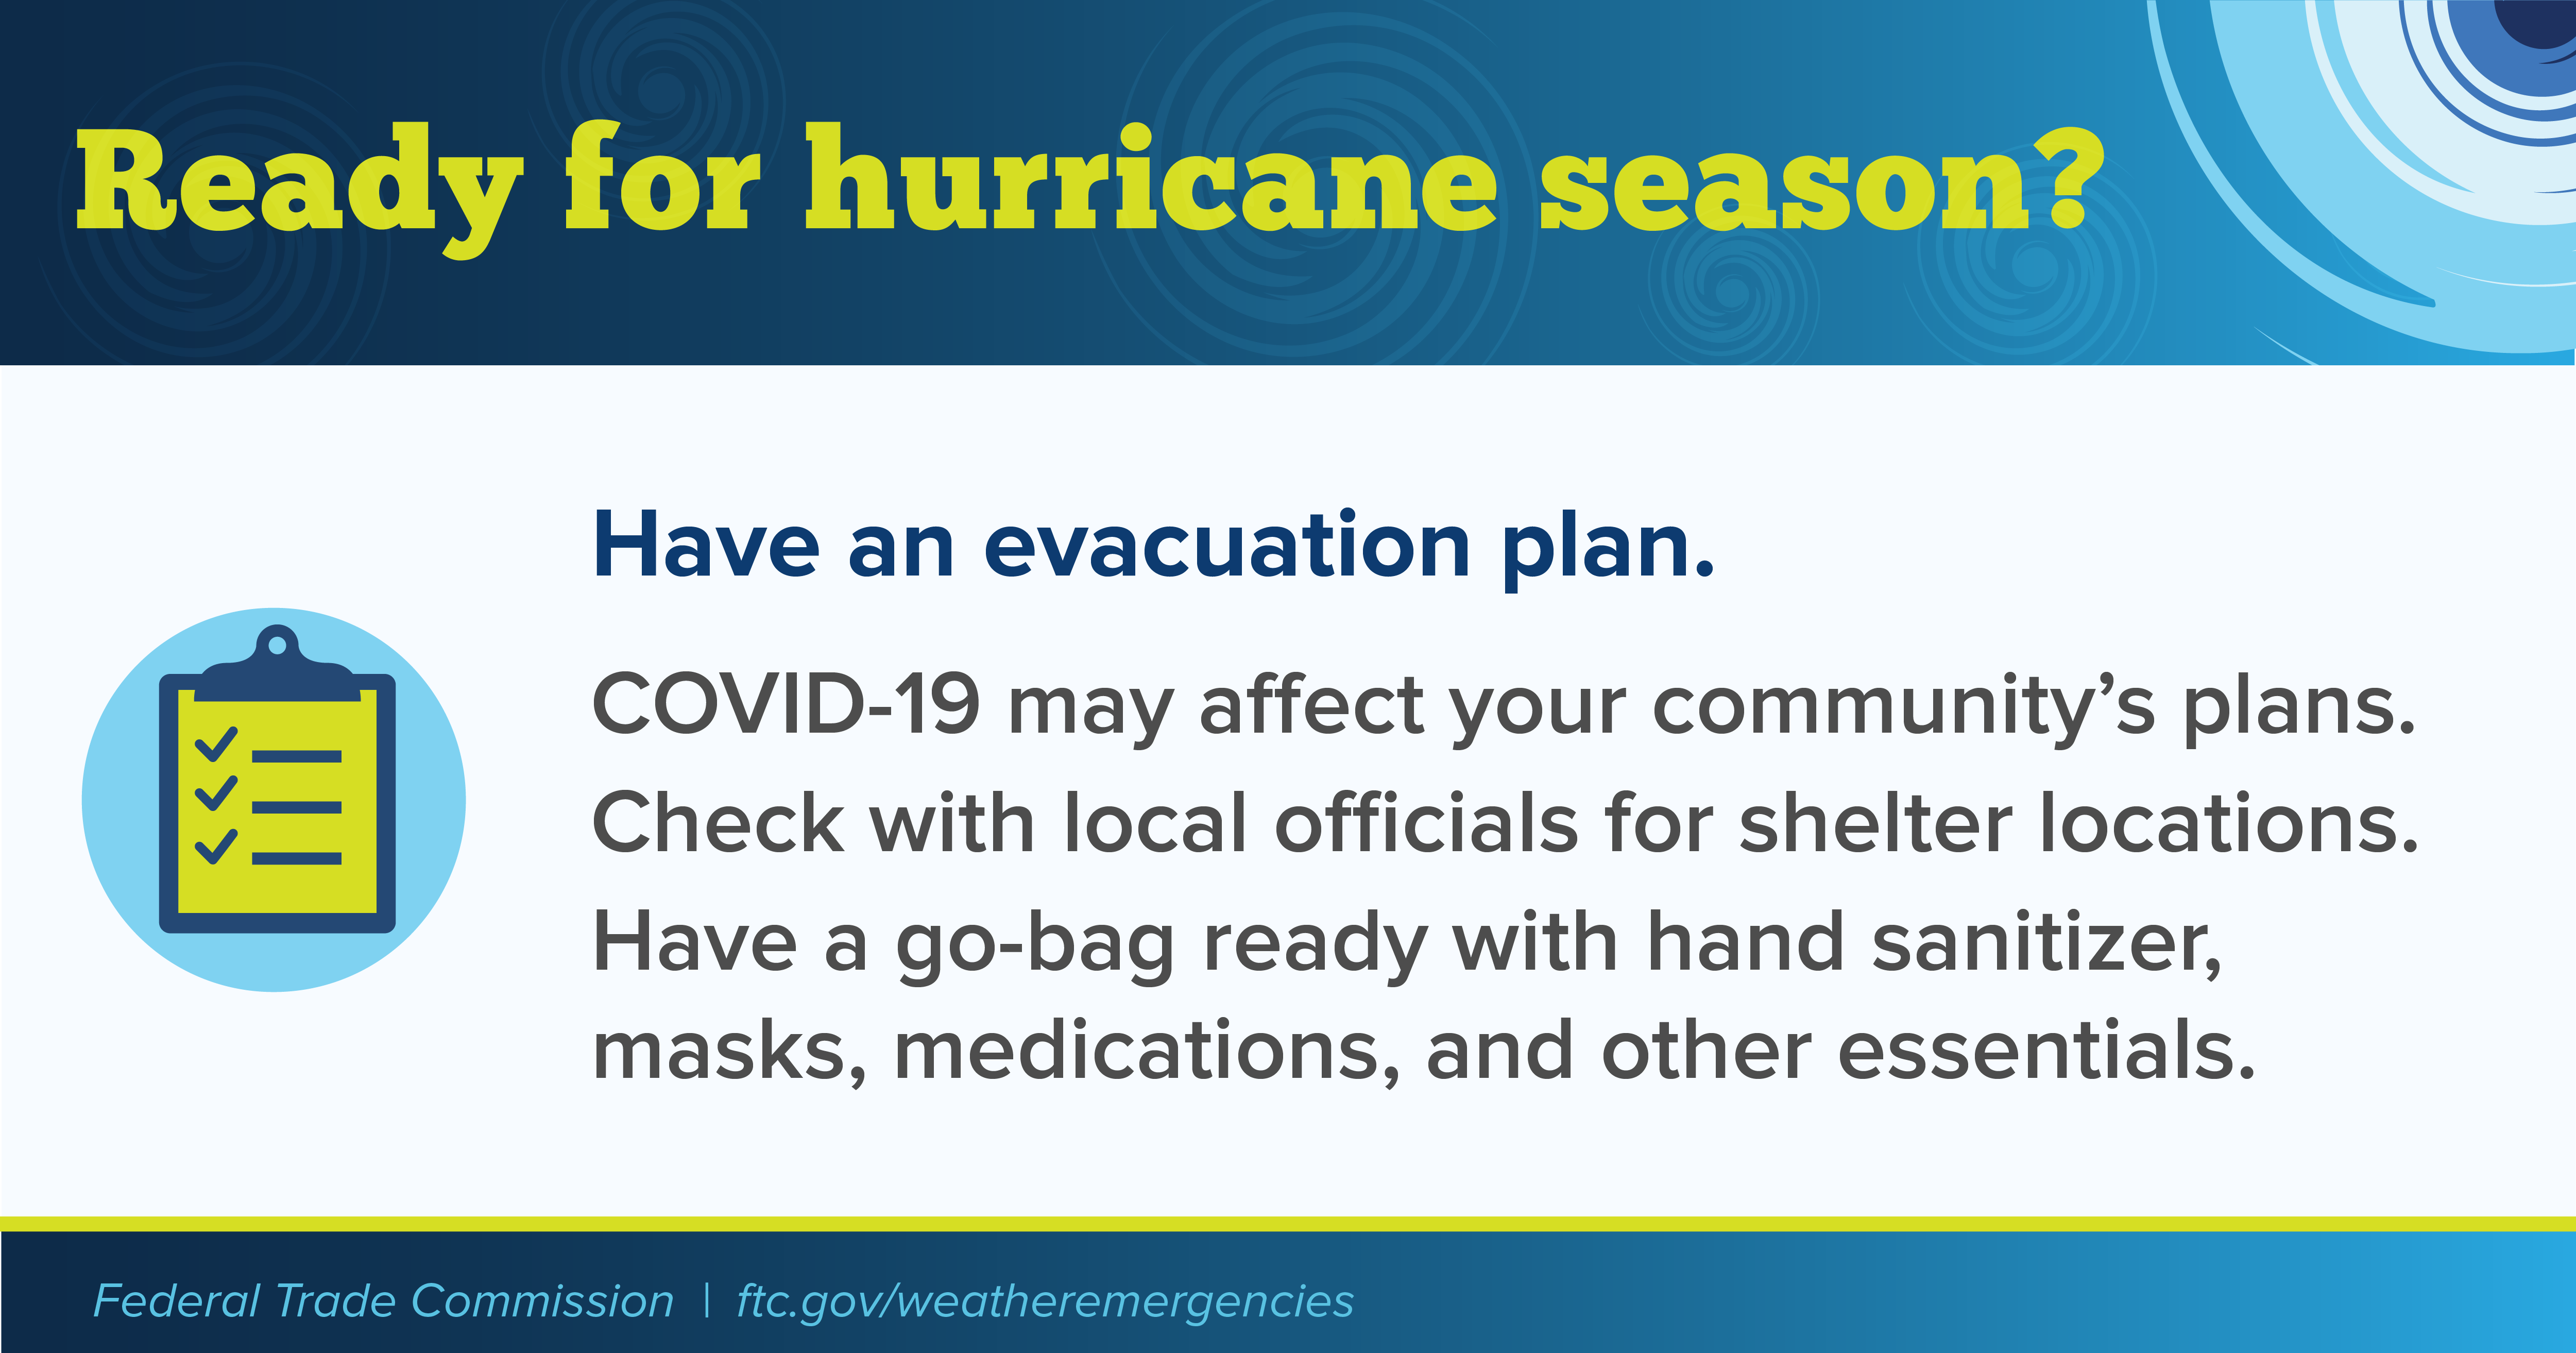 Have an evacuation plan